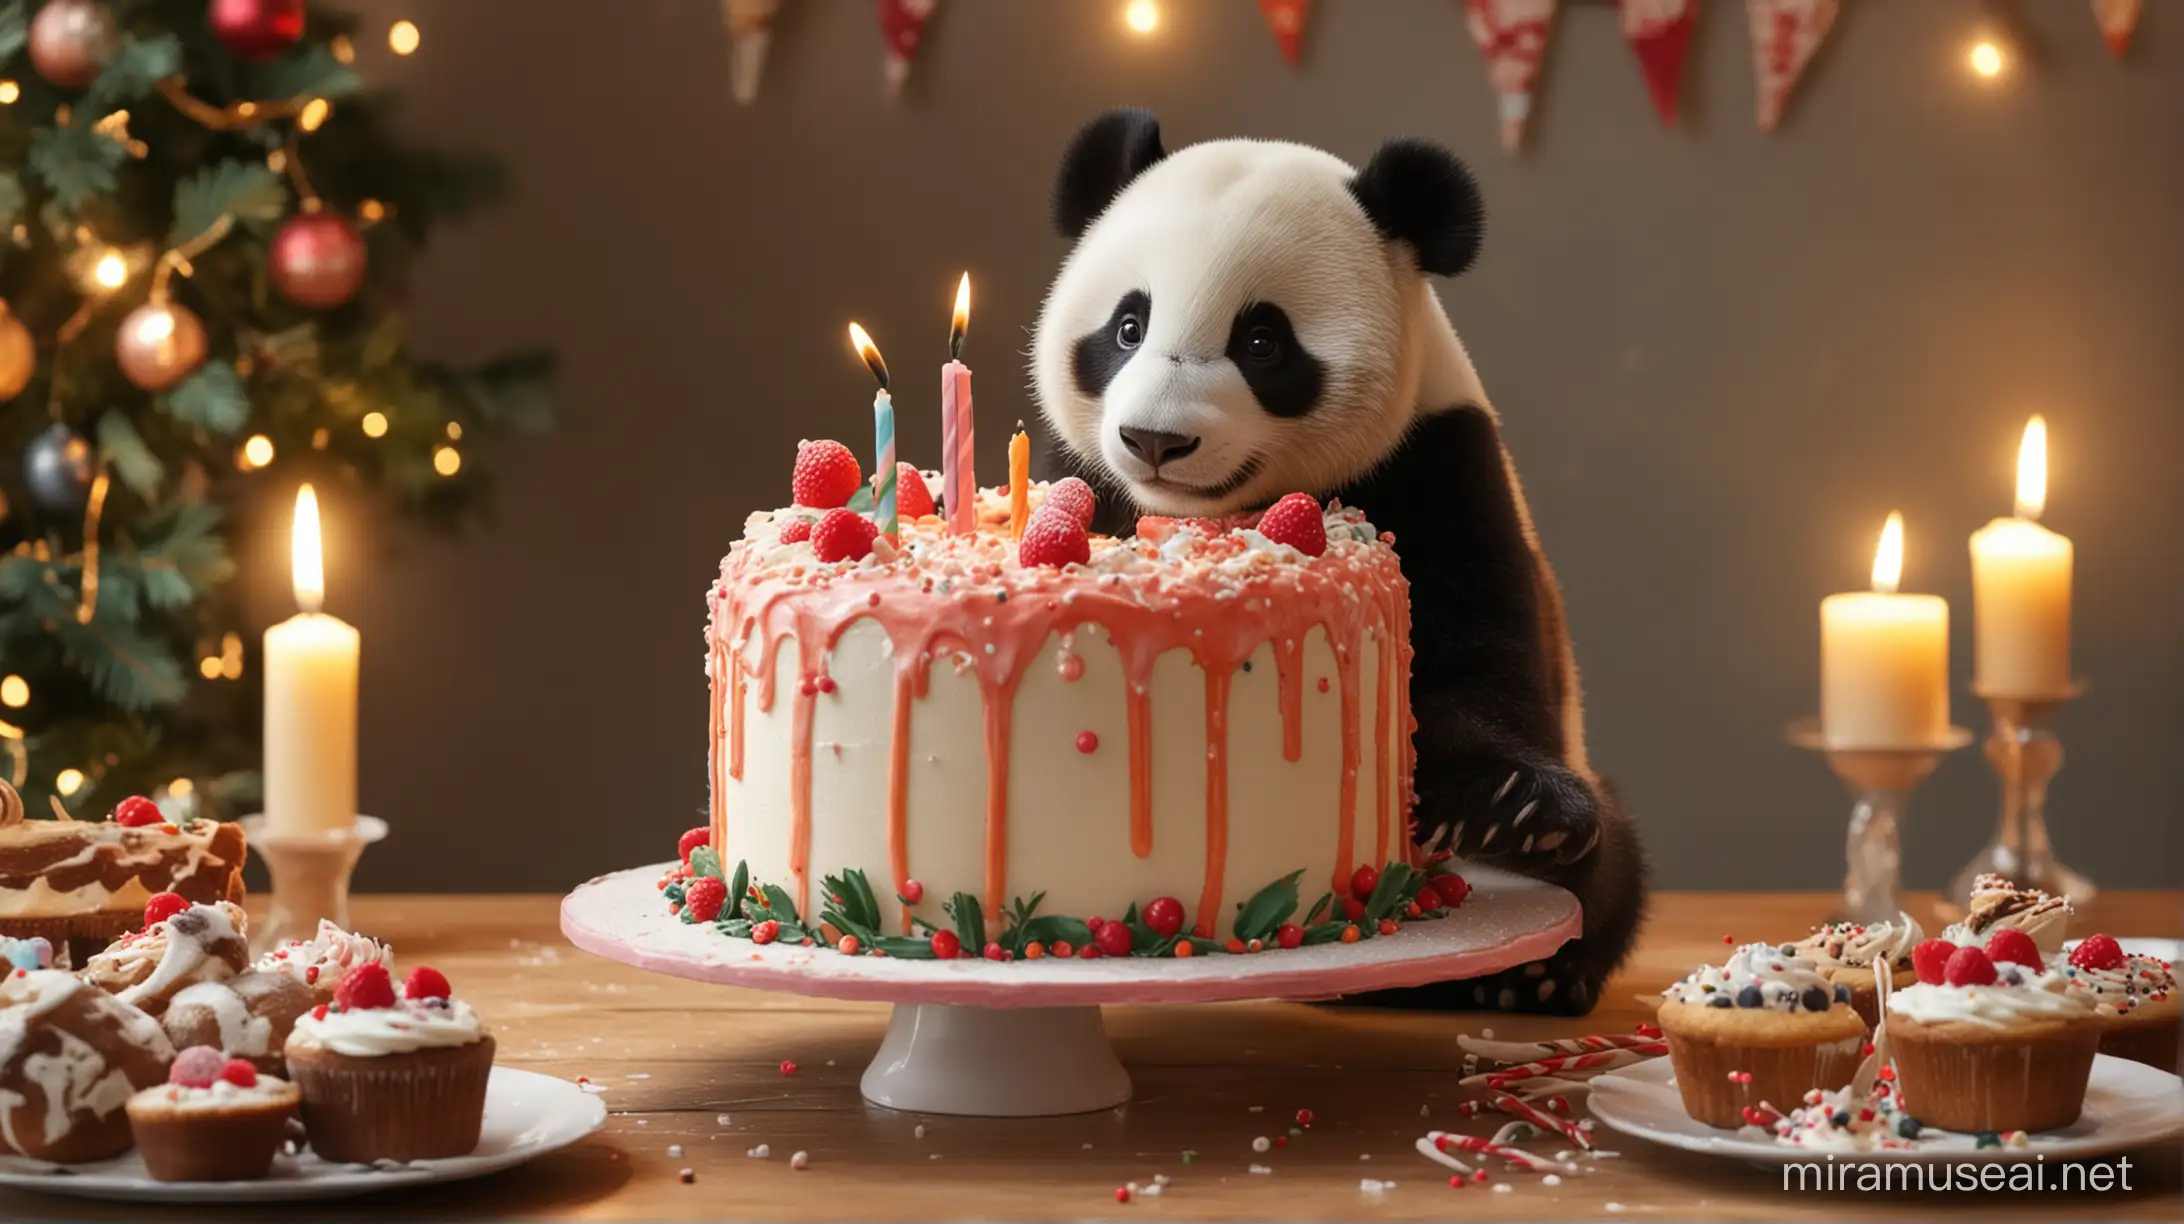 Festive Panda Celebrating with a Birthday Cake